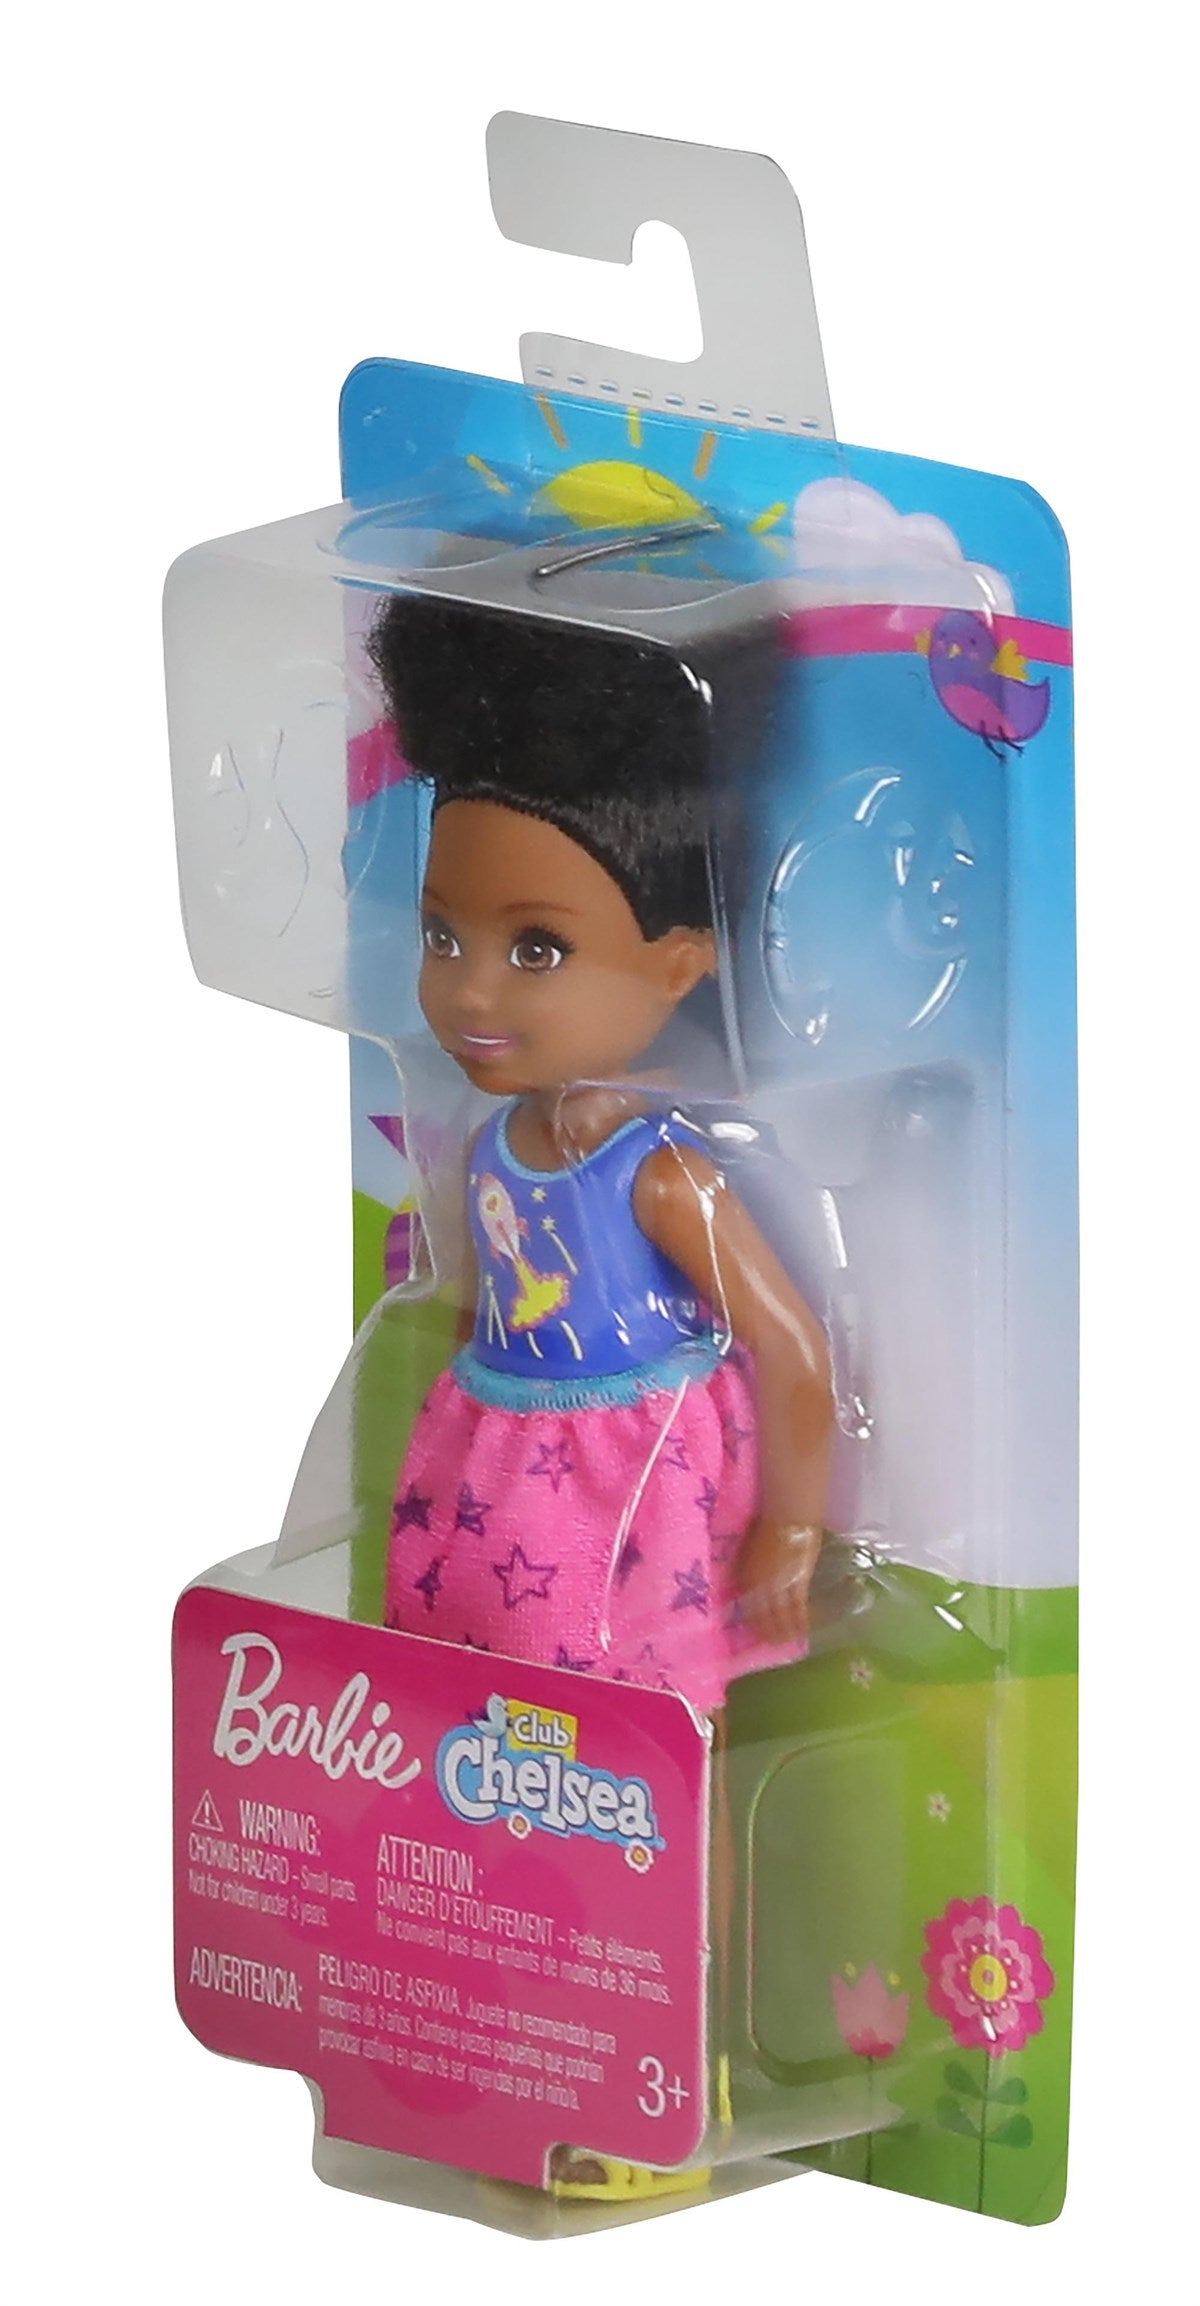 Barbie Club Chelsea Bebek DWJ33-GHV62 | Toysall